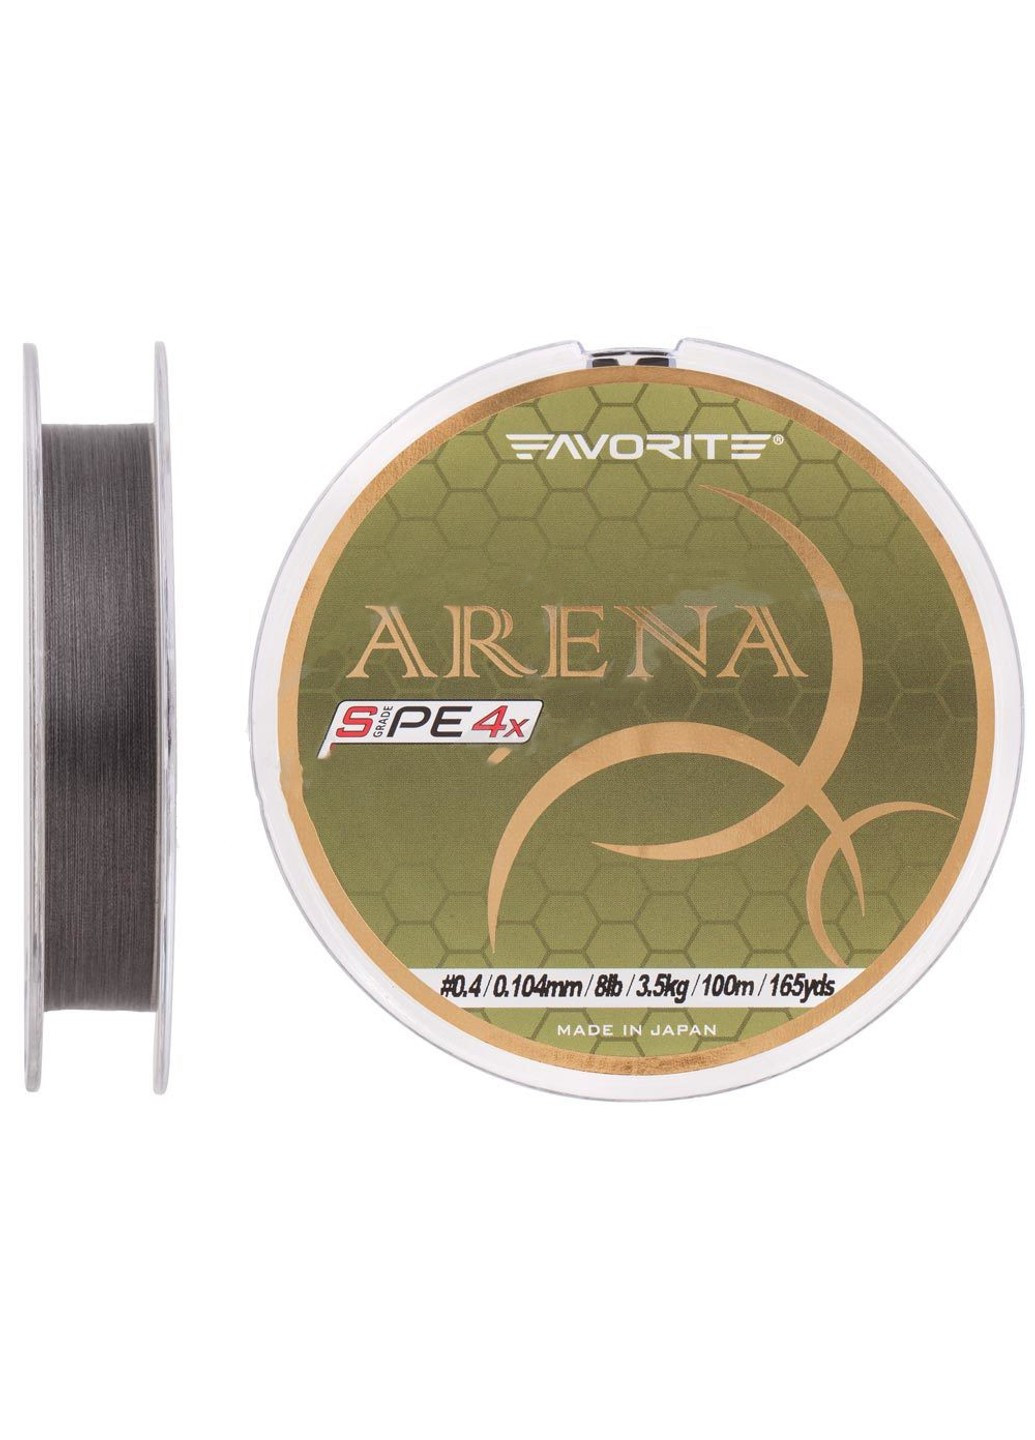 Шнур Arena PE 4x 100m (silver gray) #0.175/0.071mm 4lb/1.4kg (1693-10-92) Favorite (252468281)